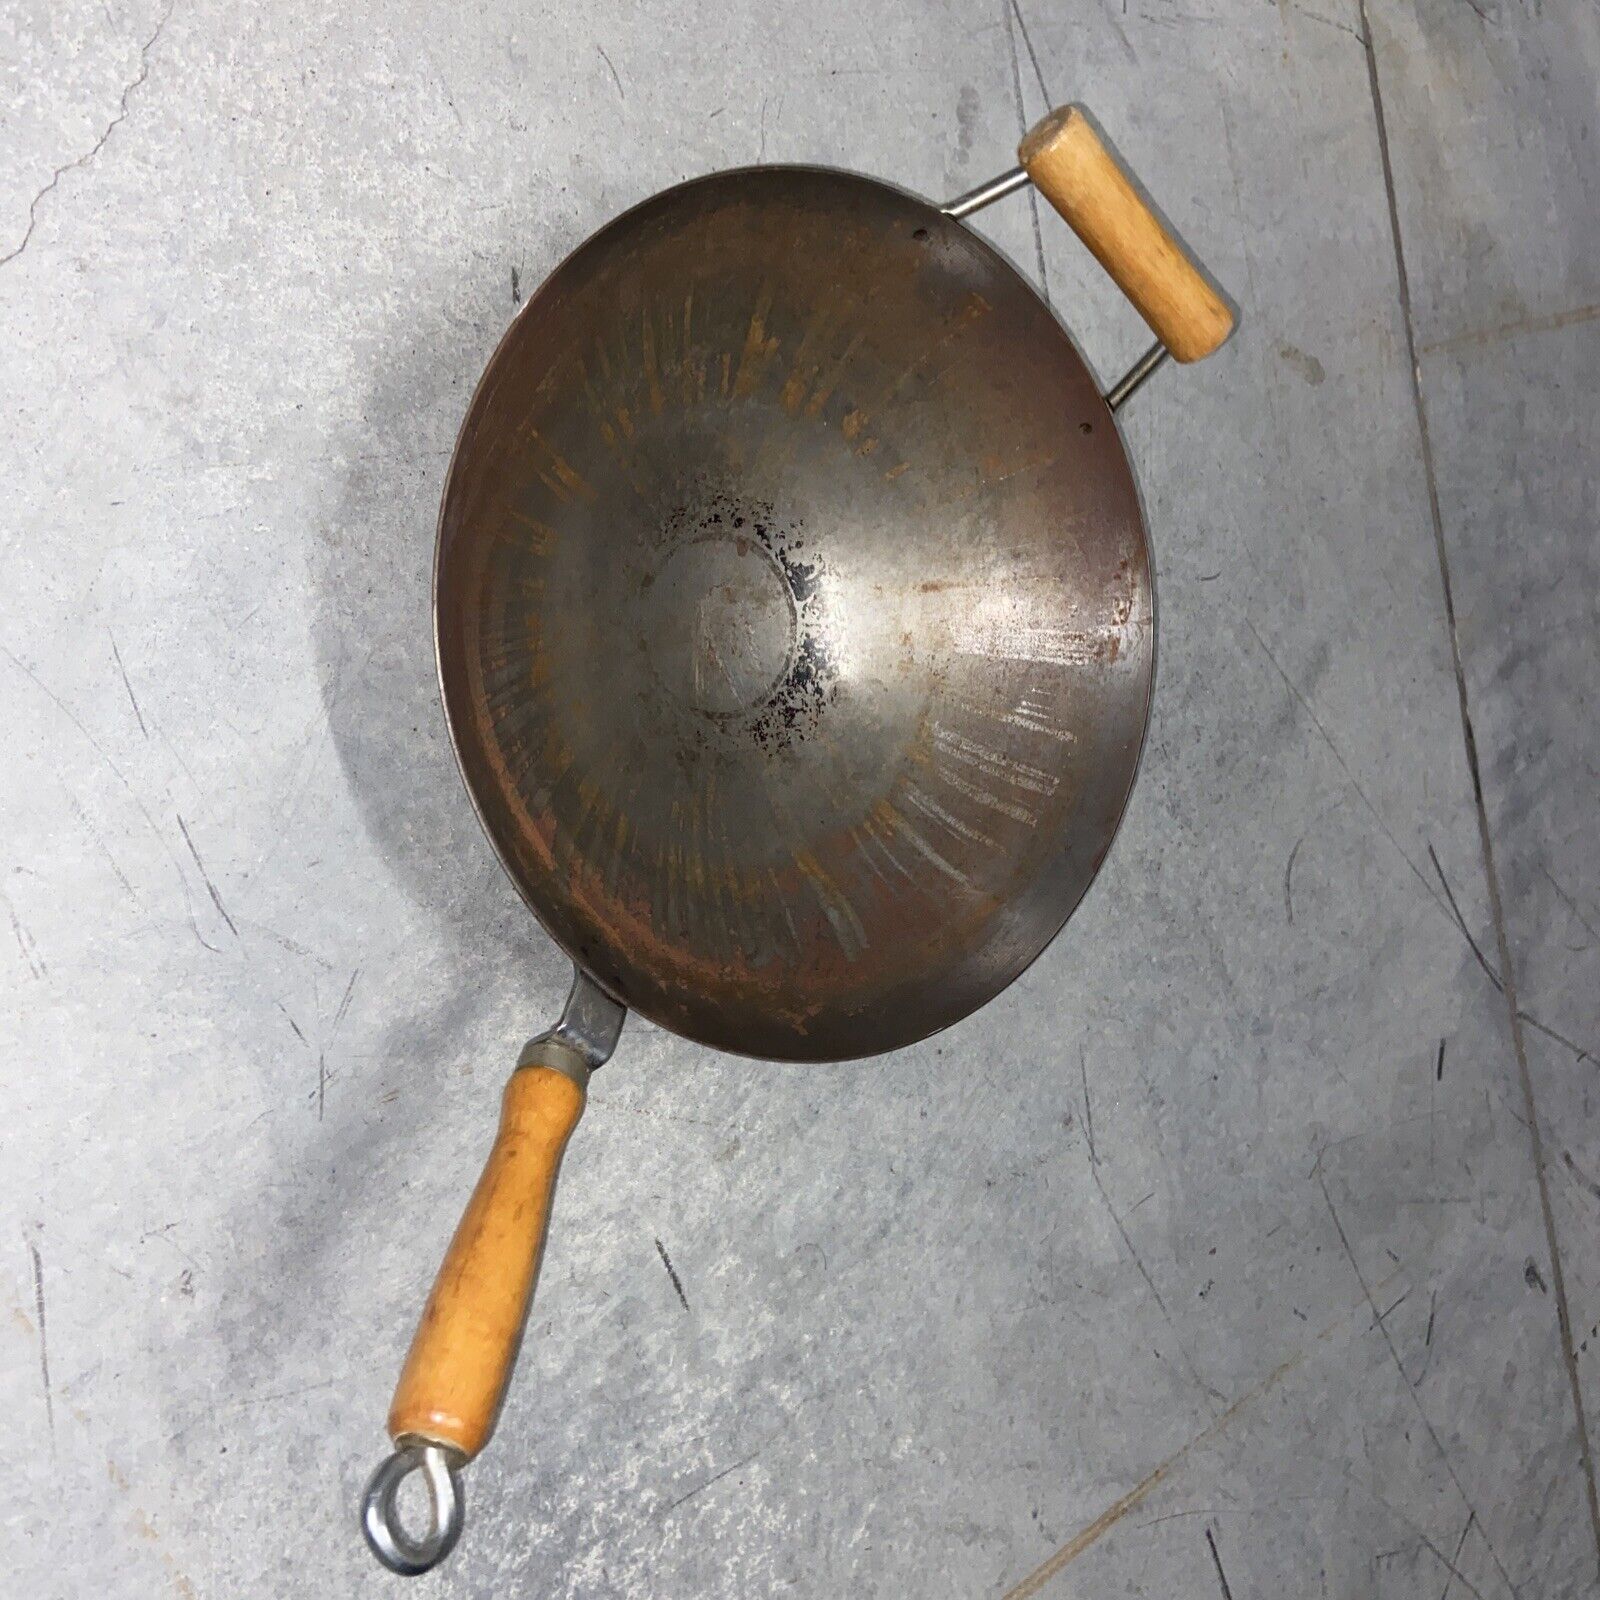 Wok Vintage 14 inch Atlas Metal Spinning Co. Wok Slightly Used 